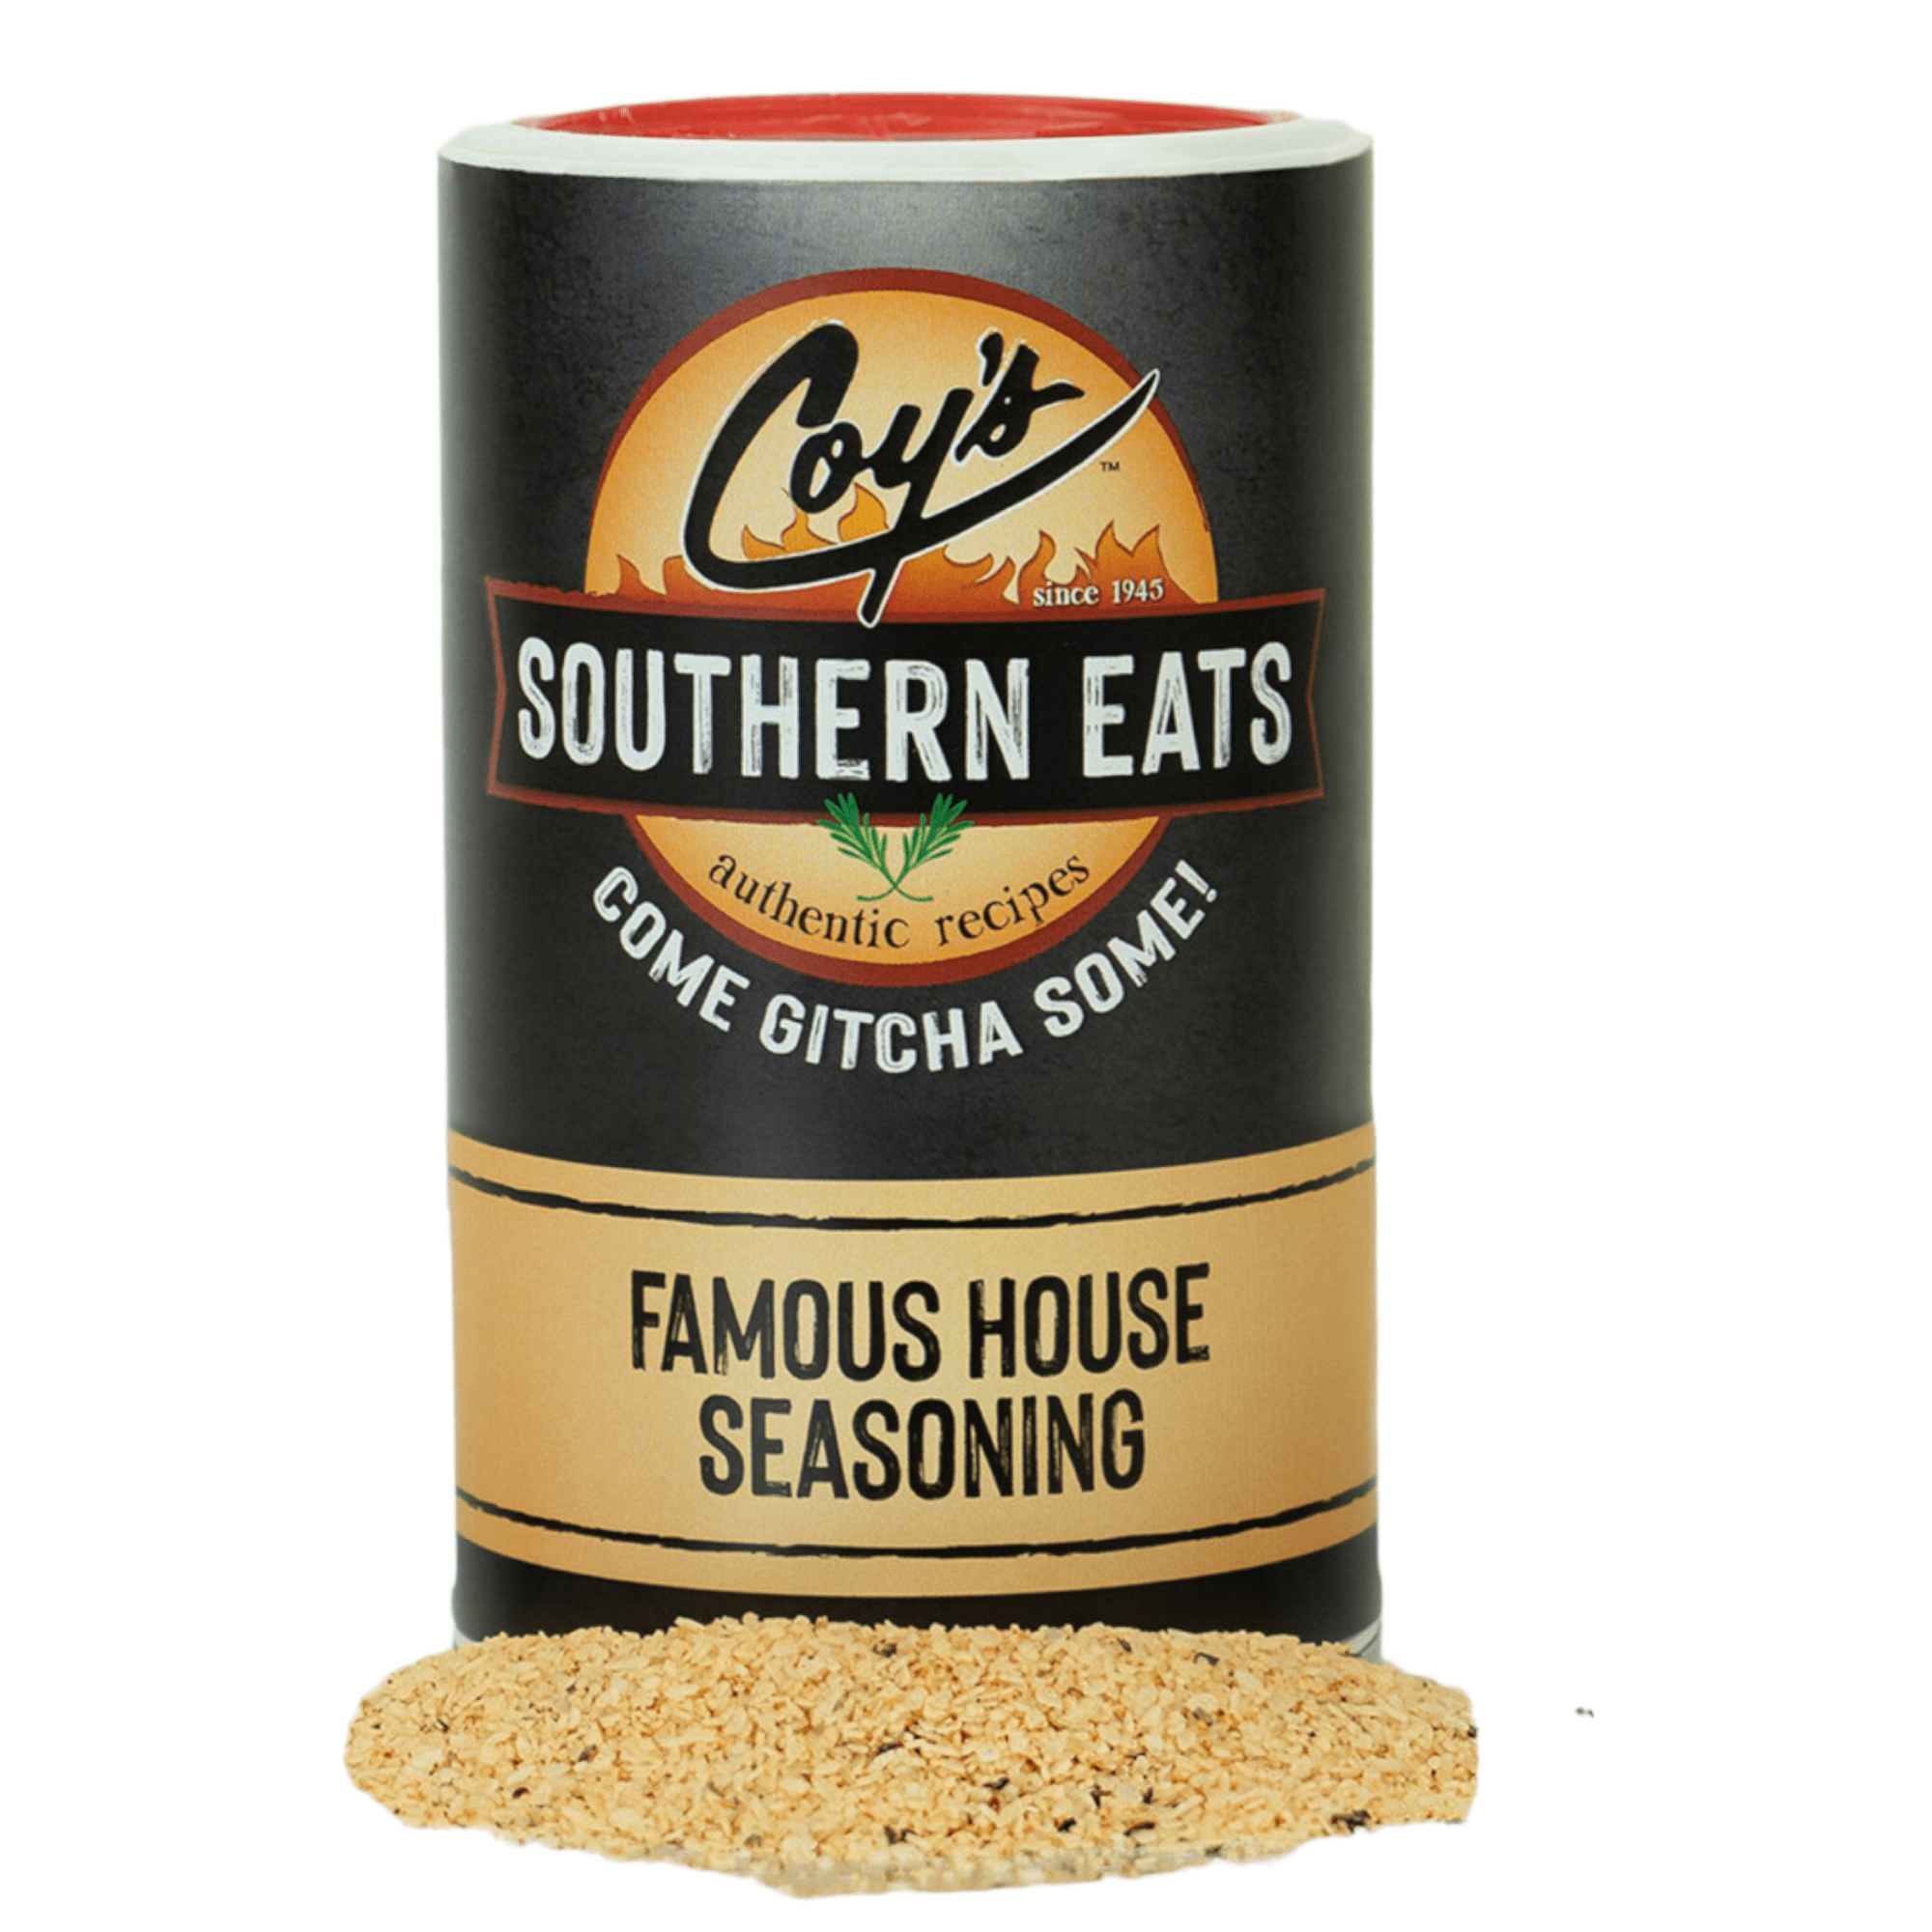 Coy's Southern Eats Famous House Seasoning 6 Oz- All Purpose